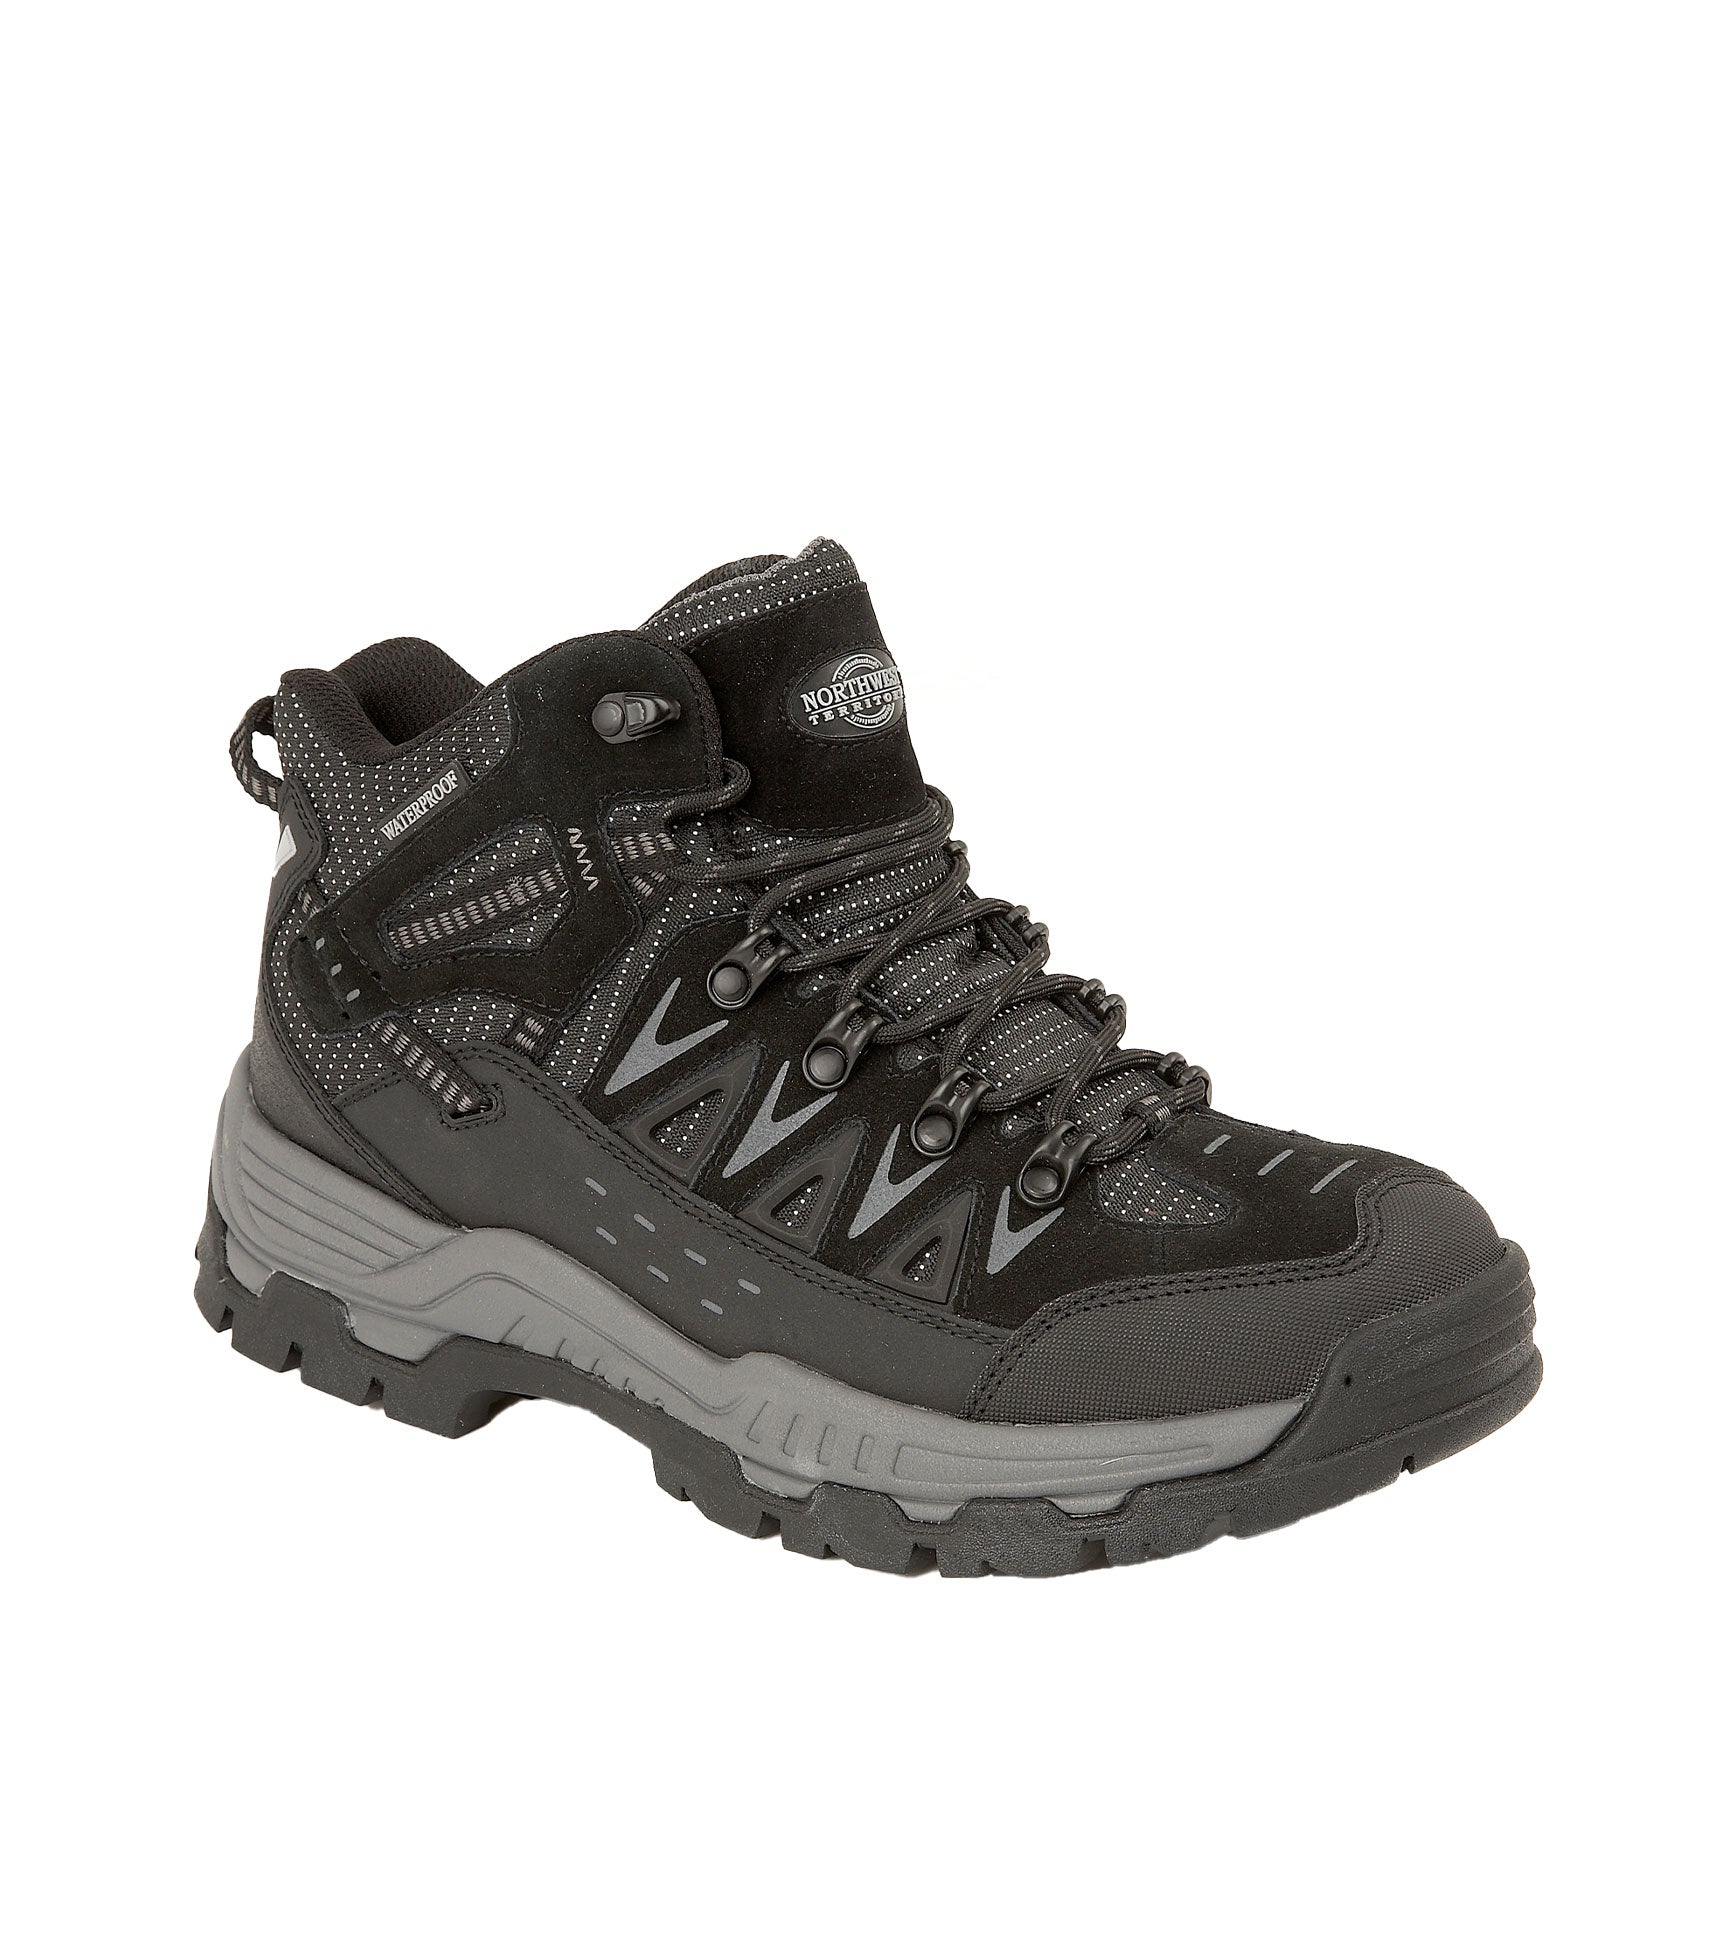 Men's Waterproof Walking Boots - Men's Waterproof Walking Boots